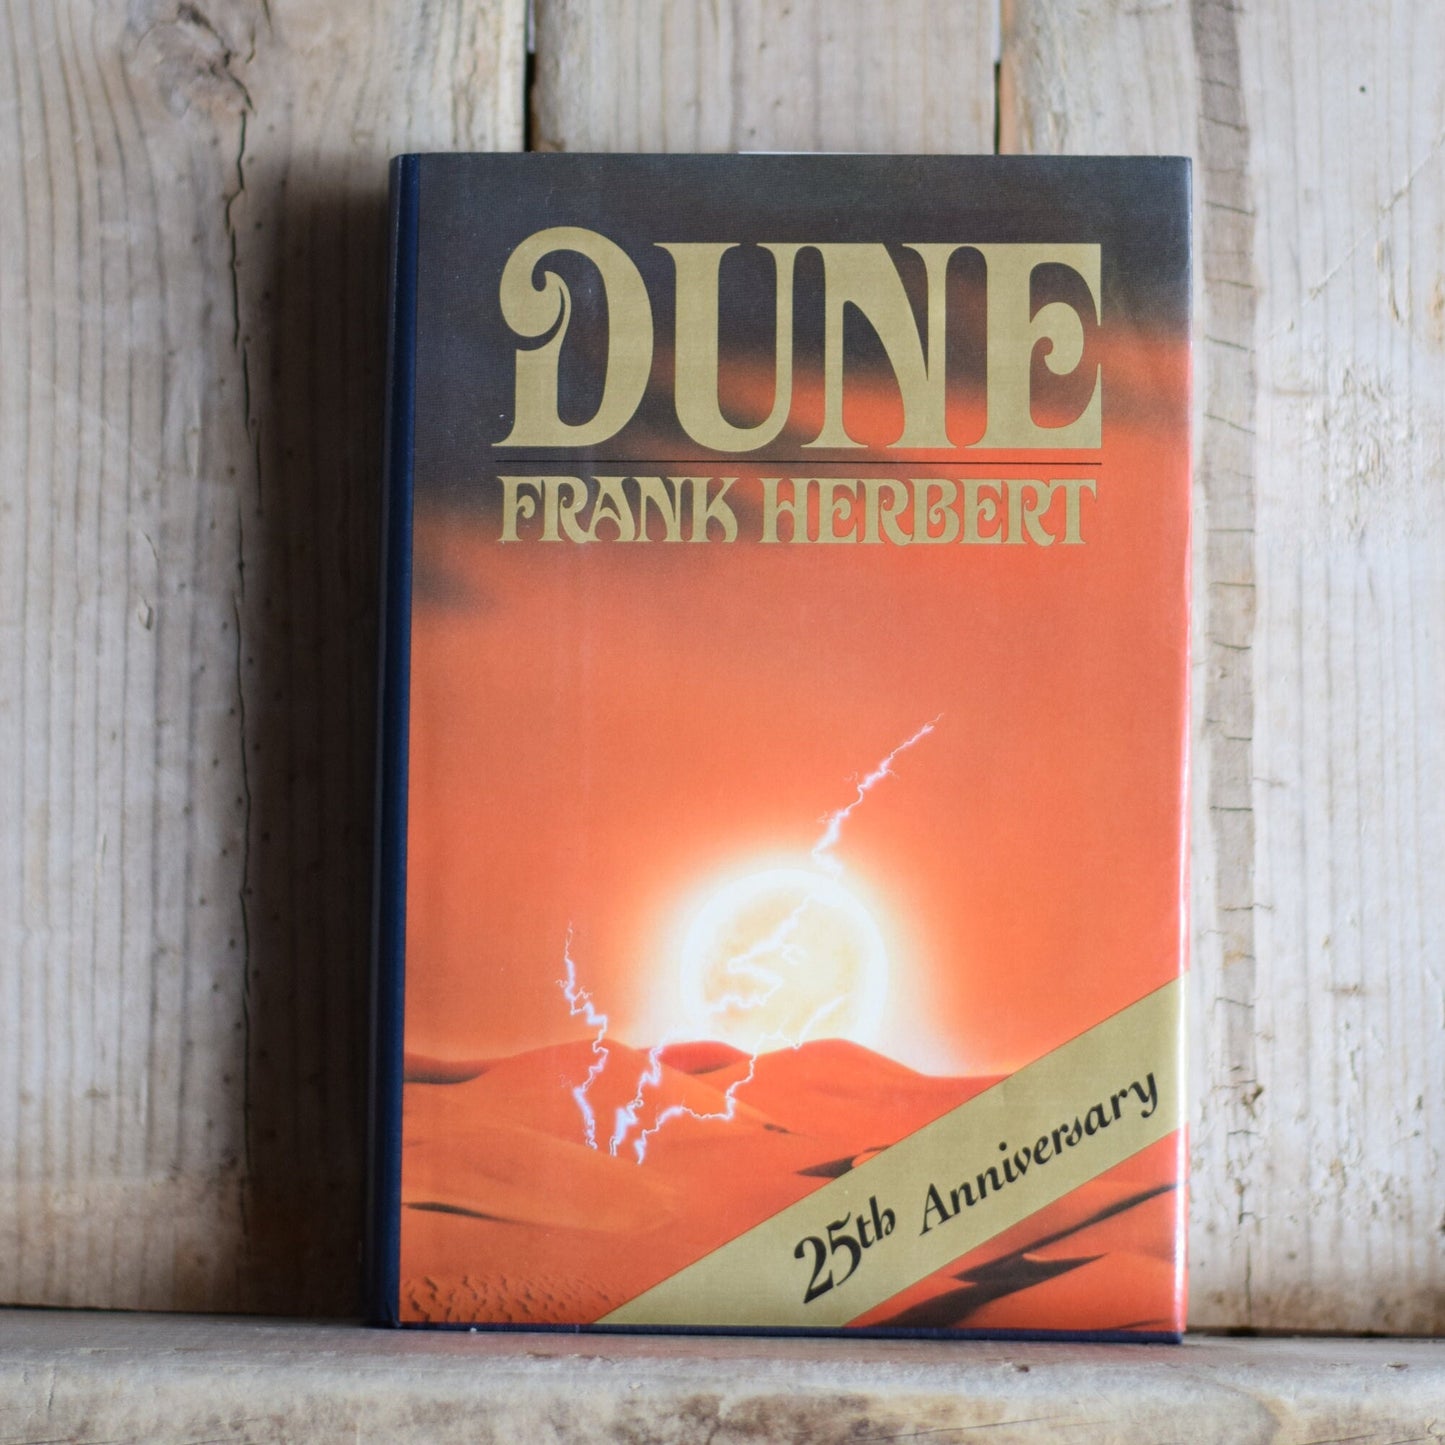 Vintage Sci-Fi Hardback Novel: Frank Herbert - Dune 25th Anniversary, BOMC FIRST EDITION